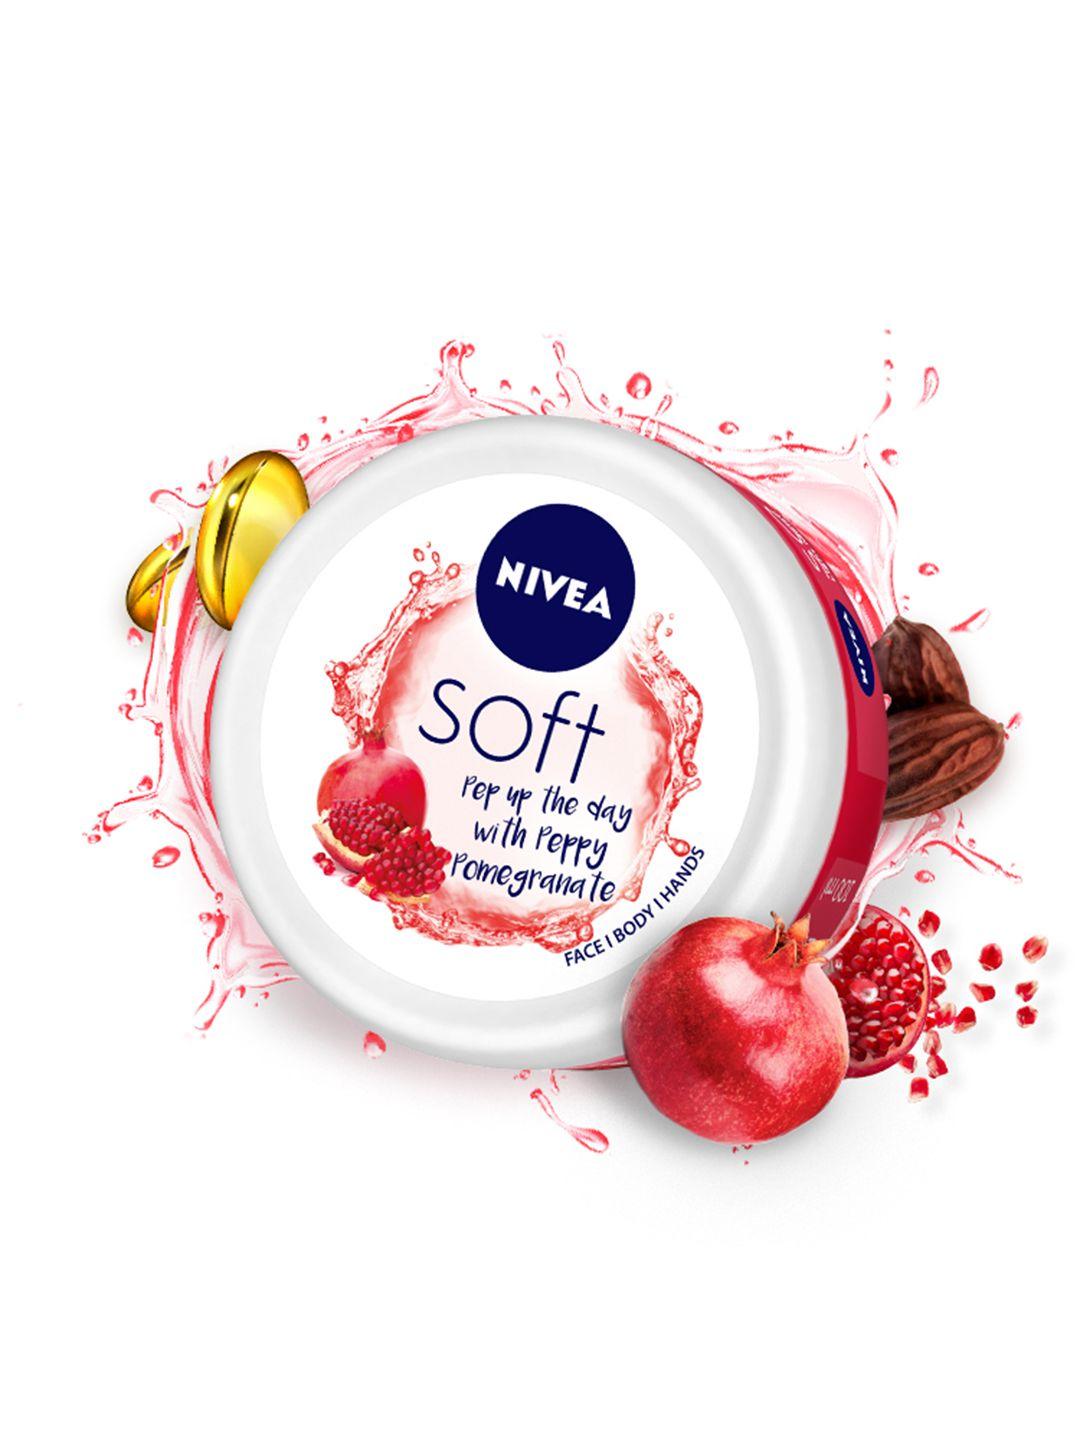 nivea soft light moisturizer cream - peppy pomegranate - for face hands & body - 200 ml